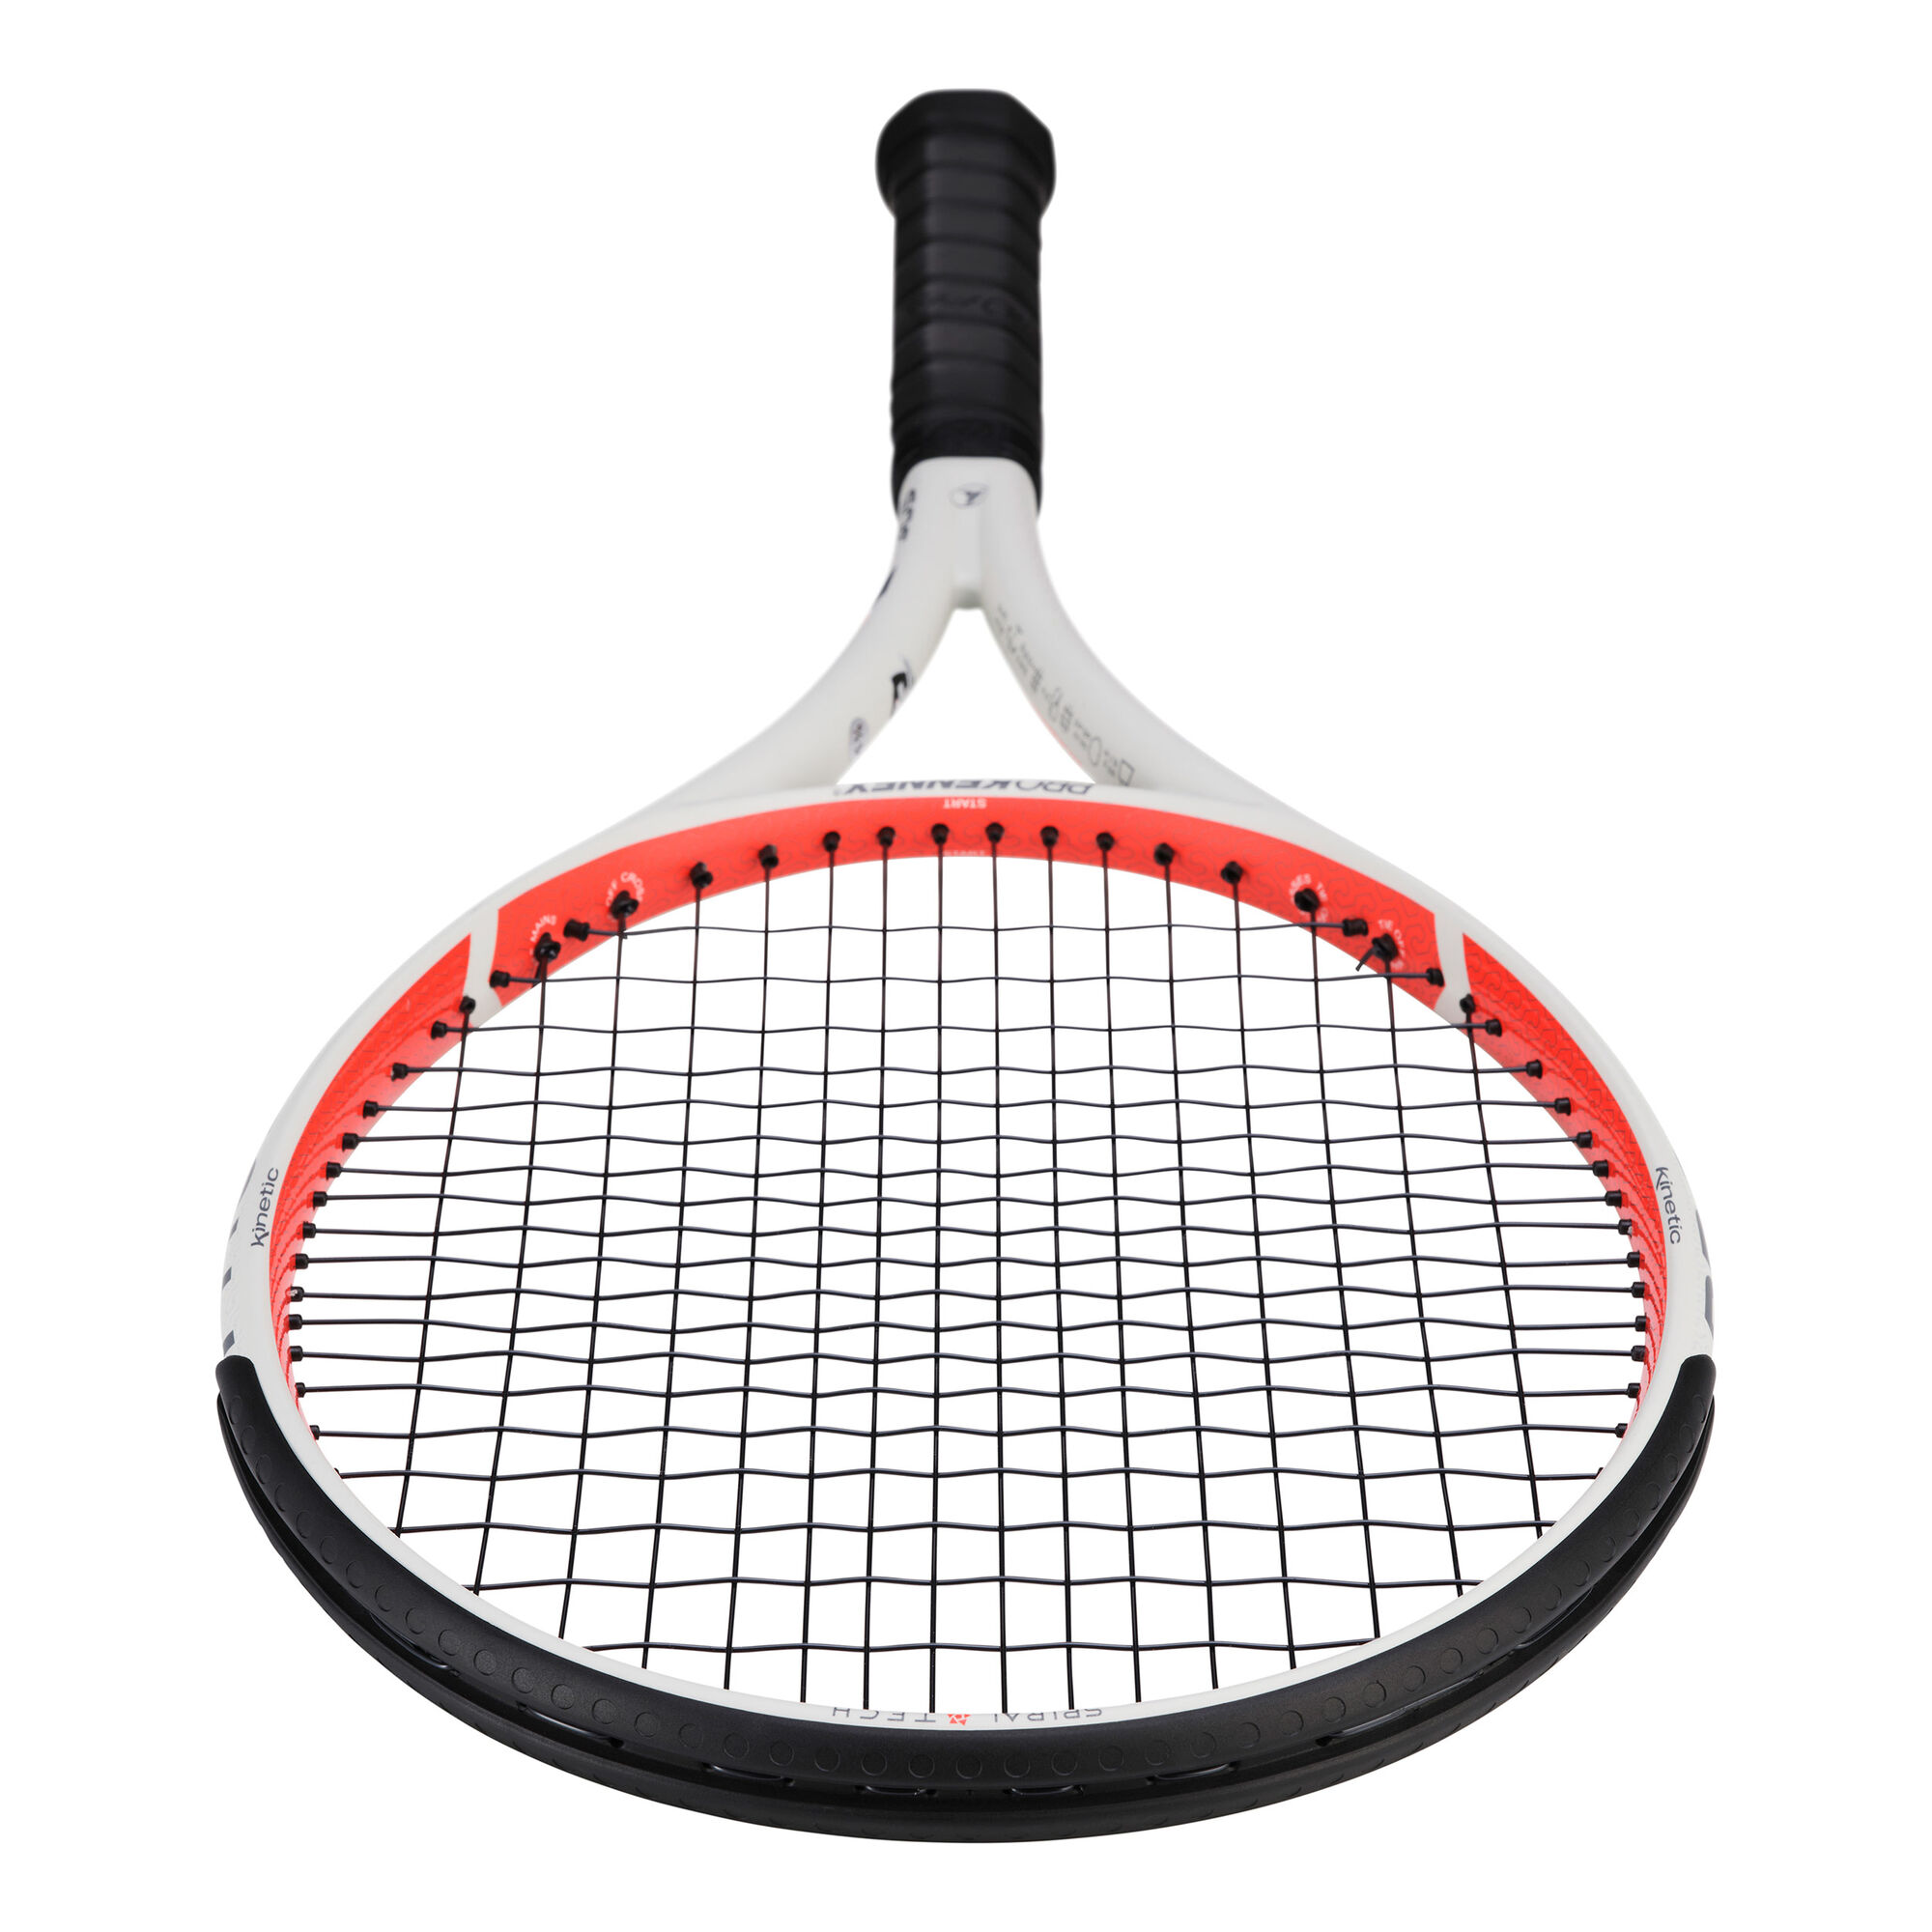 Buy PROKENNEX Kinetic 10 (305g) Tennis | Point COM online